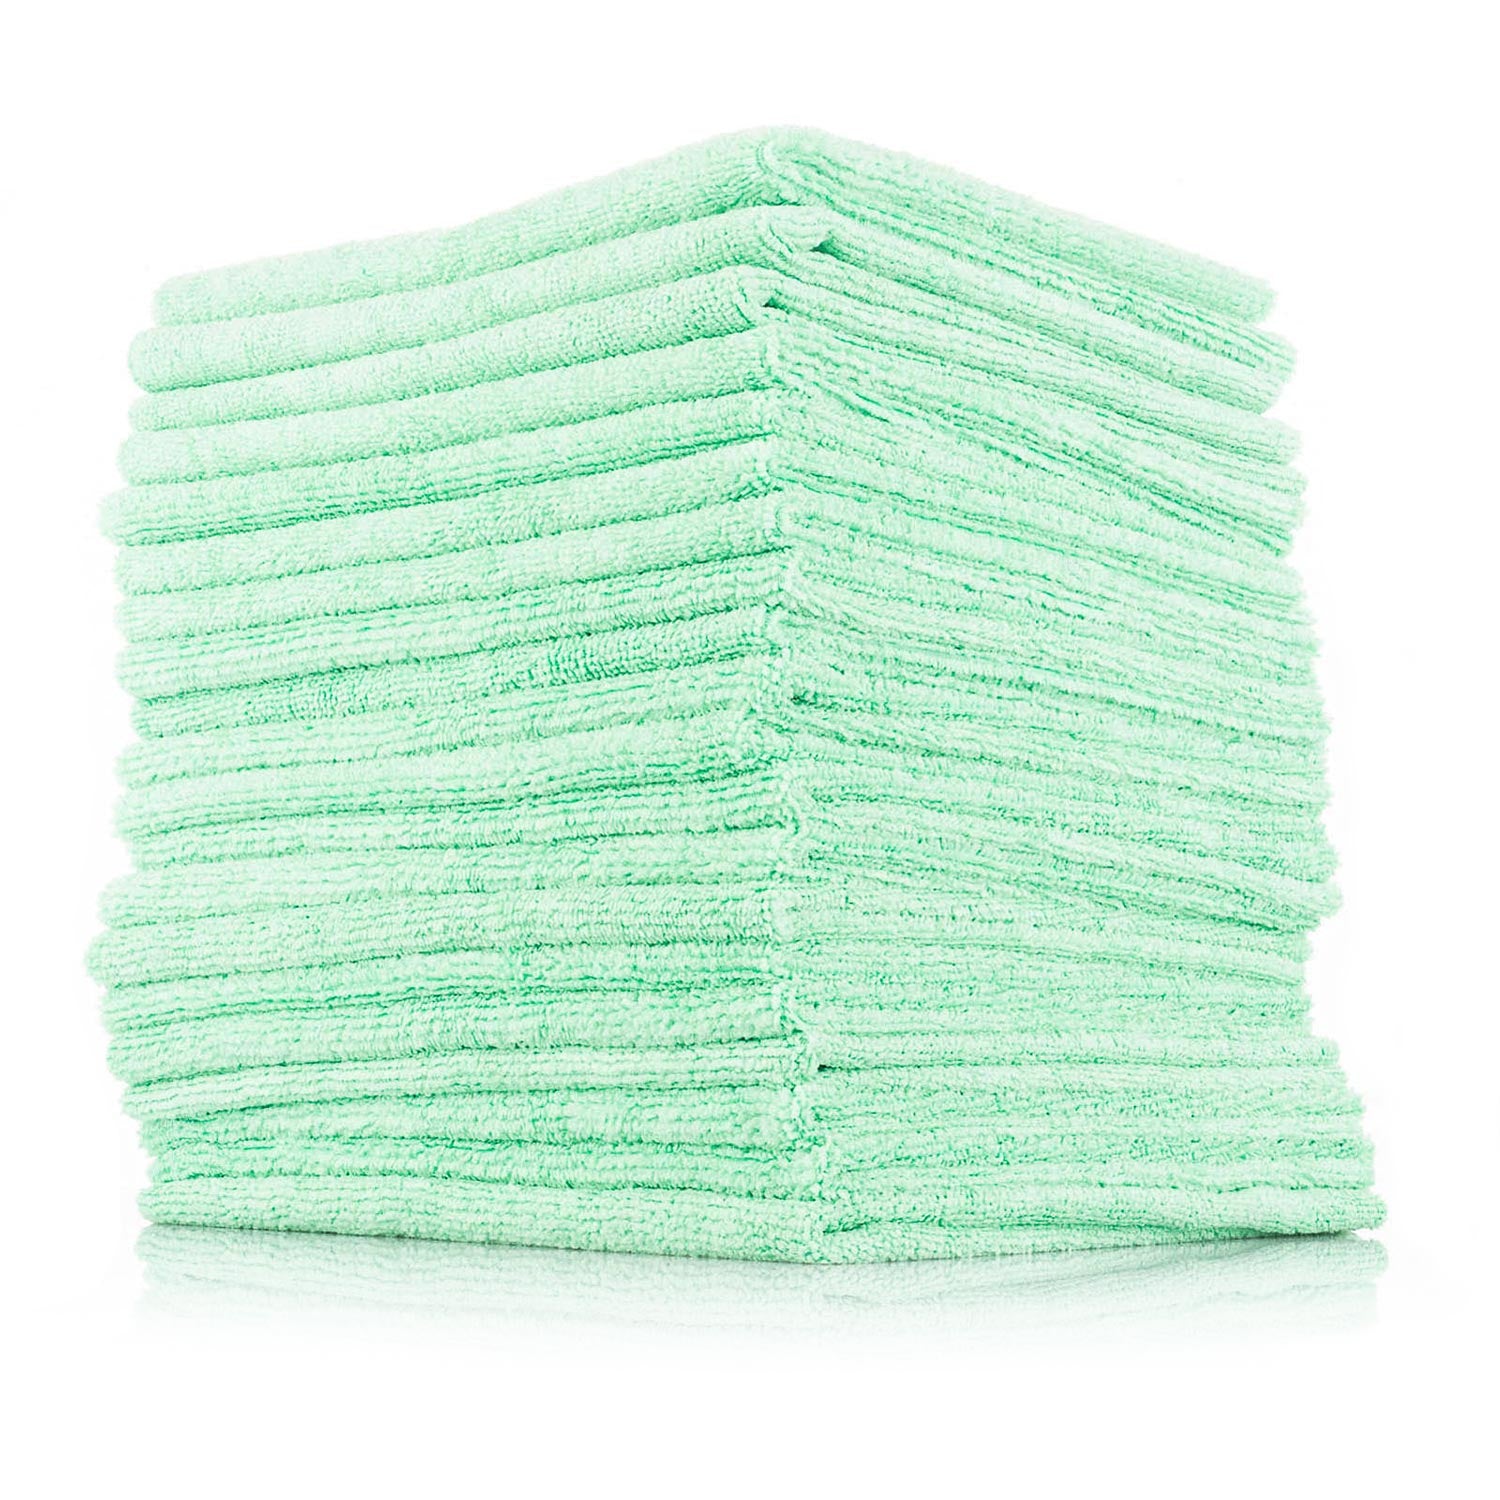 edgeless-microfiber-towels-300-gsm-green-20-pack